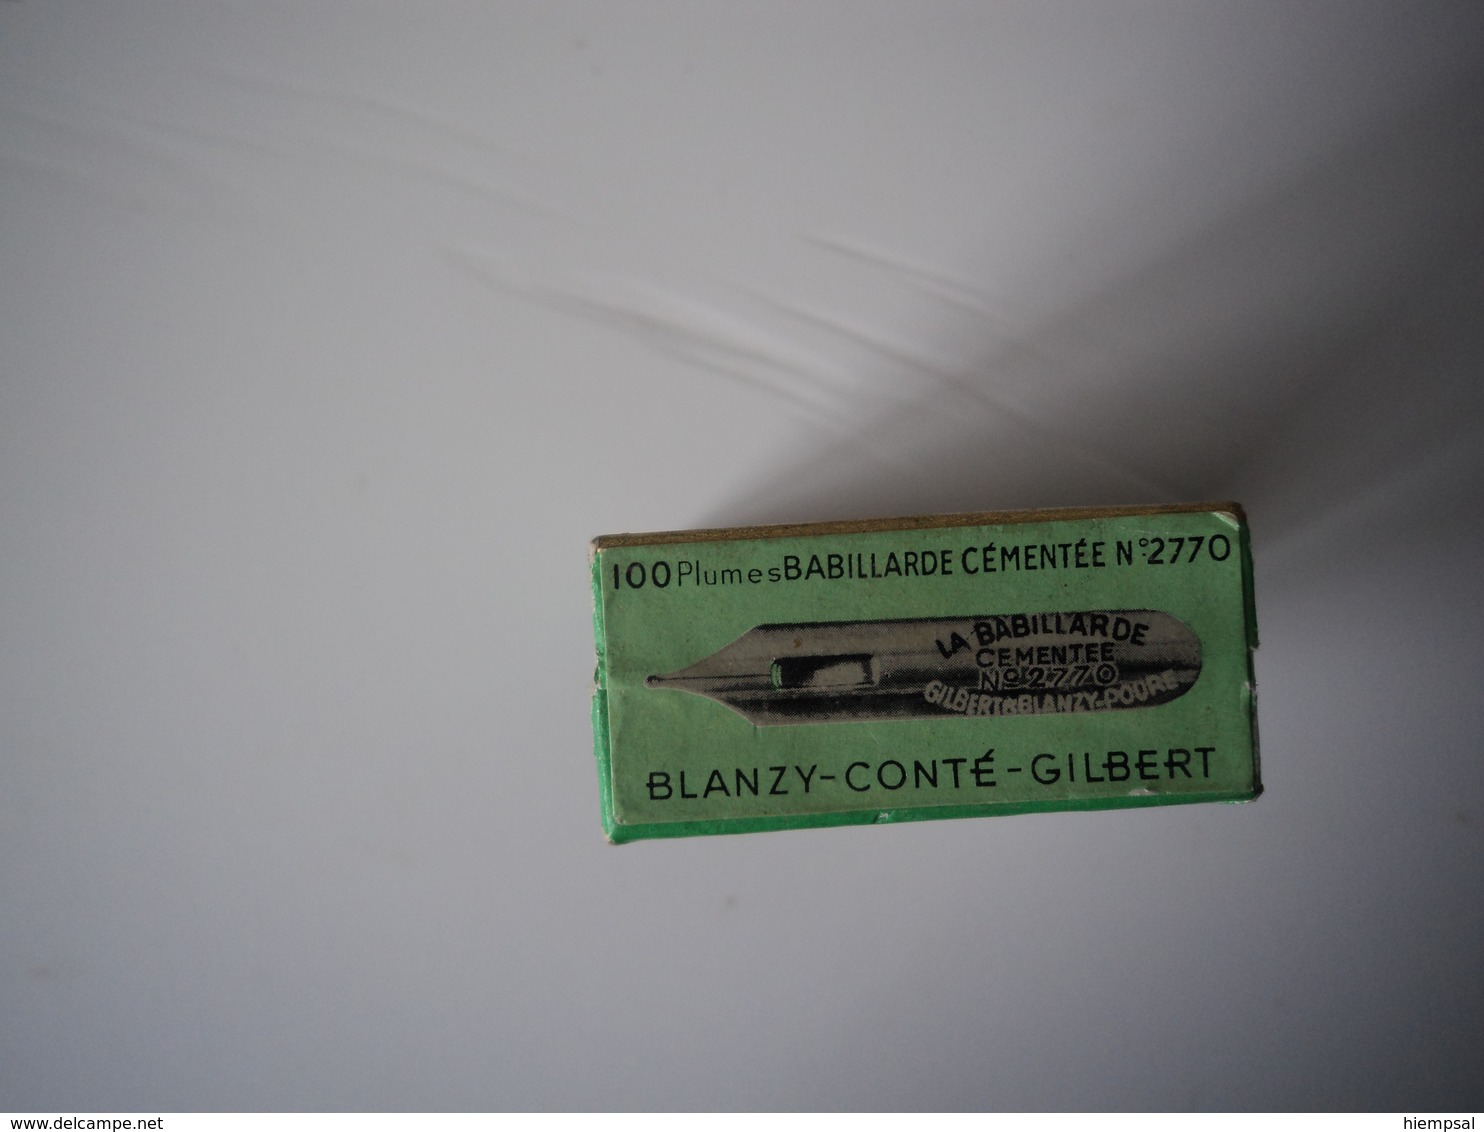 Boite Neuf  De 100 Plumes   Babillarde  Cementee   N° 2770  Blazy- Conté- Gilbert   Plomble - Pens